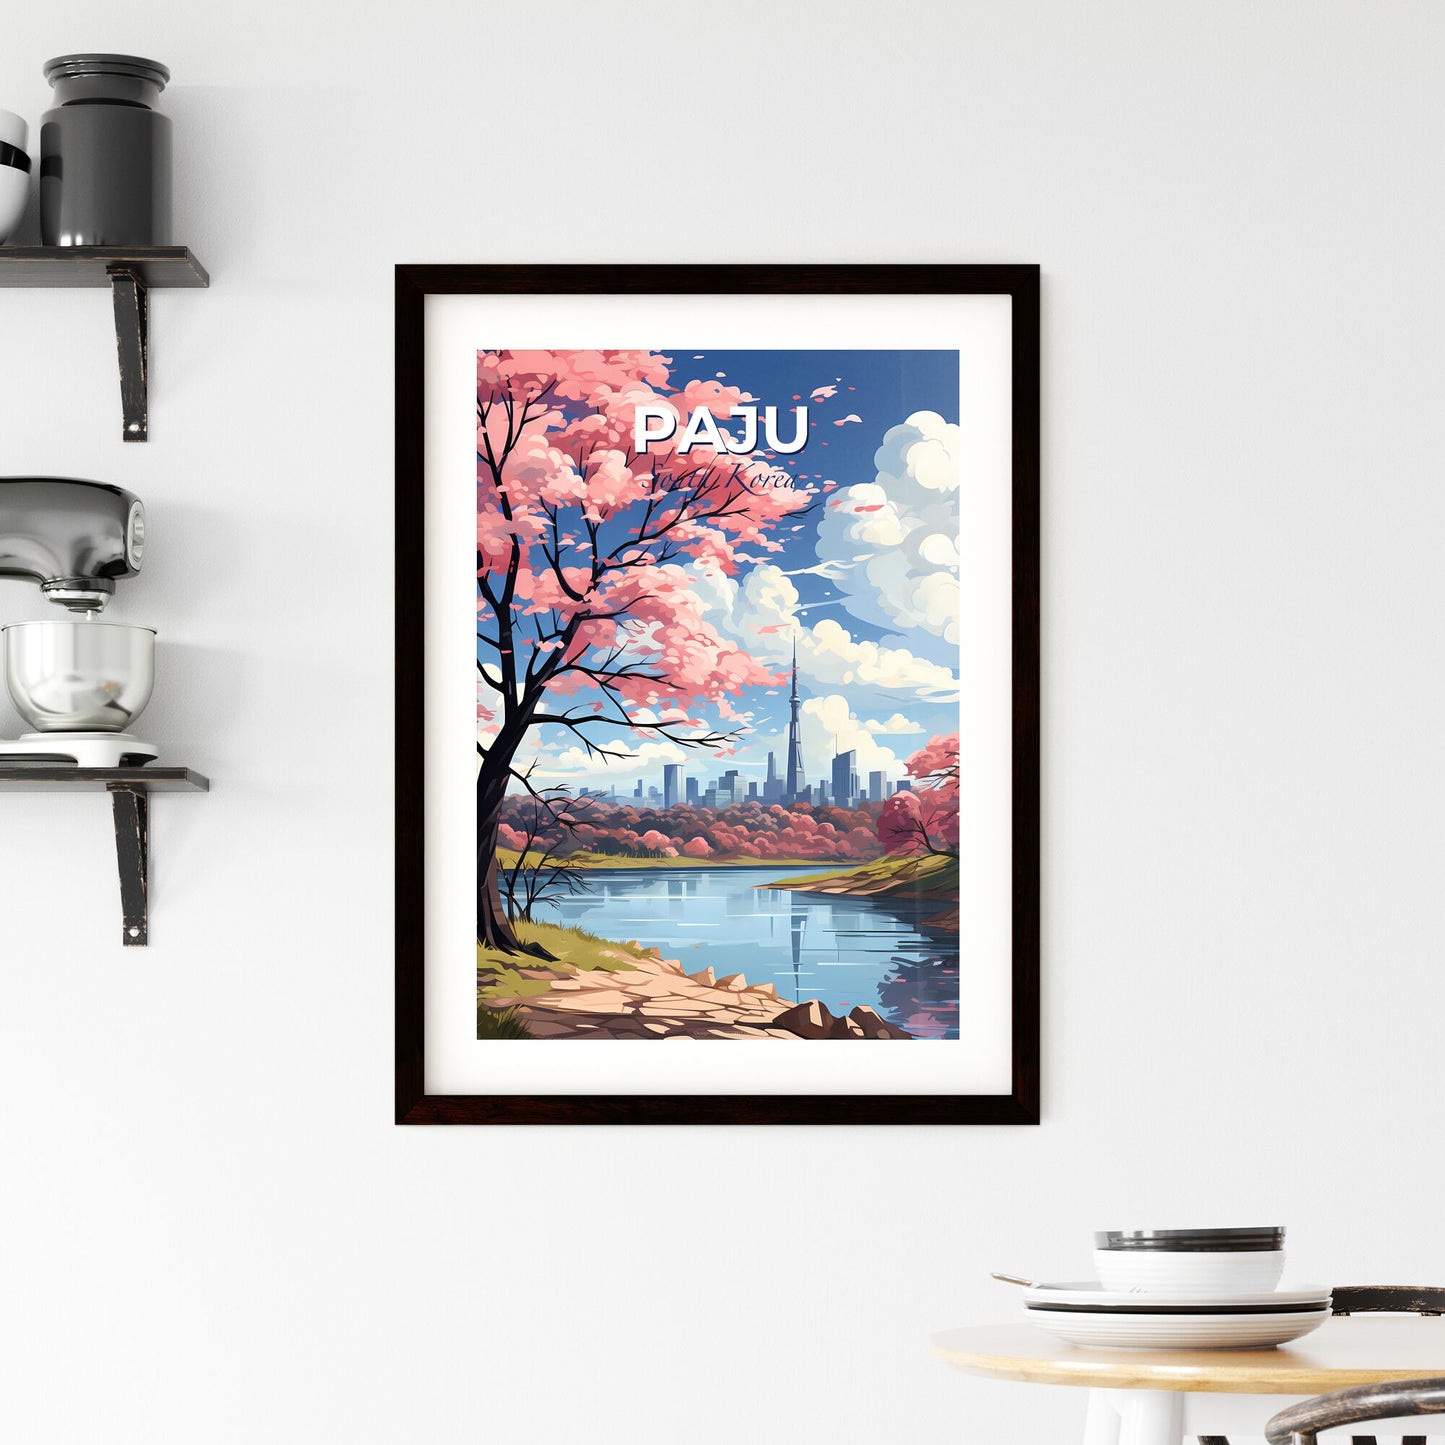 Paju South Korea Skyline Impressionistic Art Pink Trees Riverfront Painting Default Title